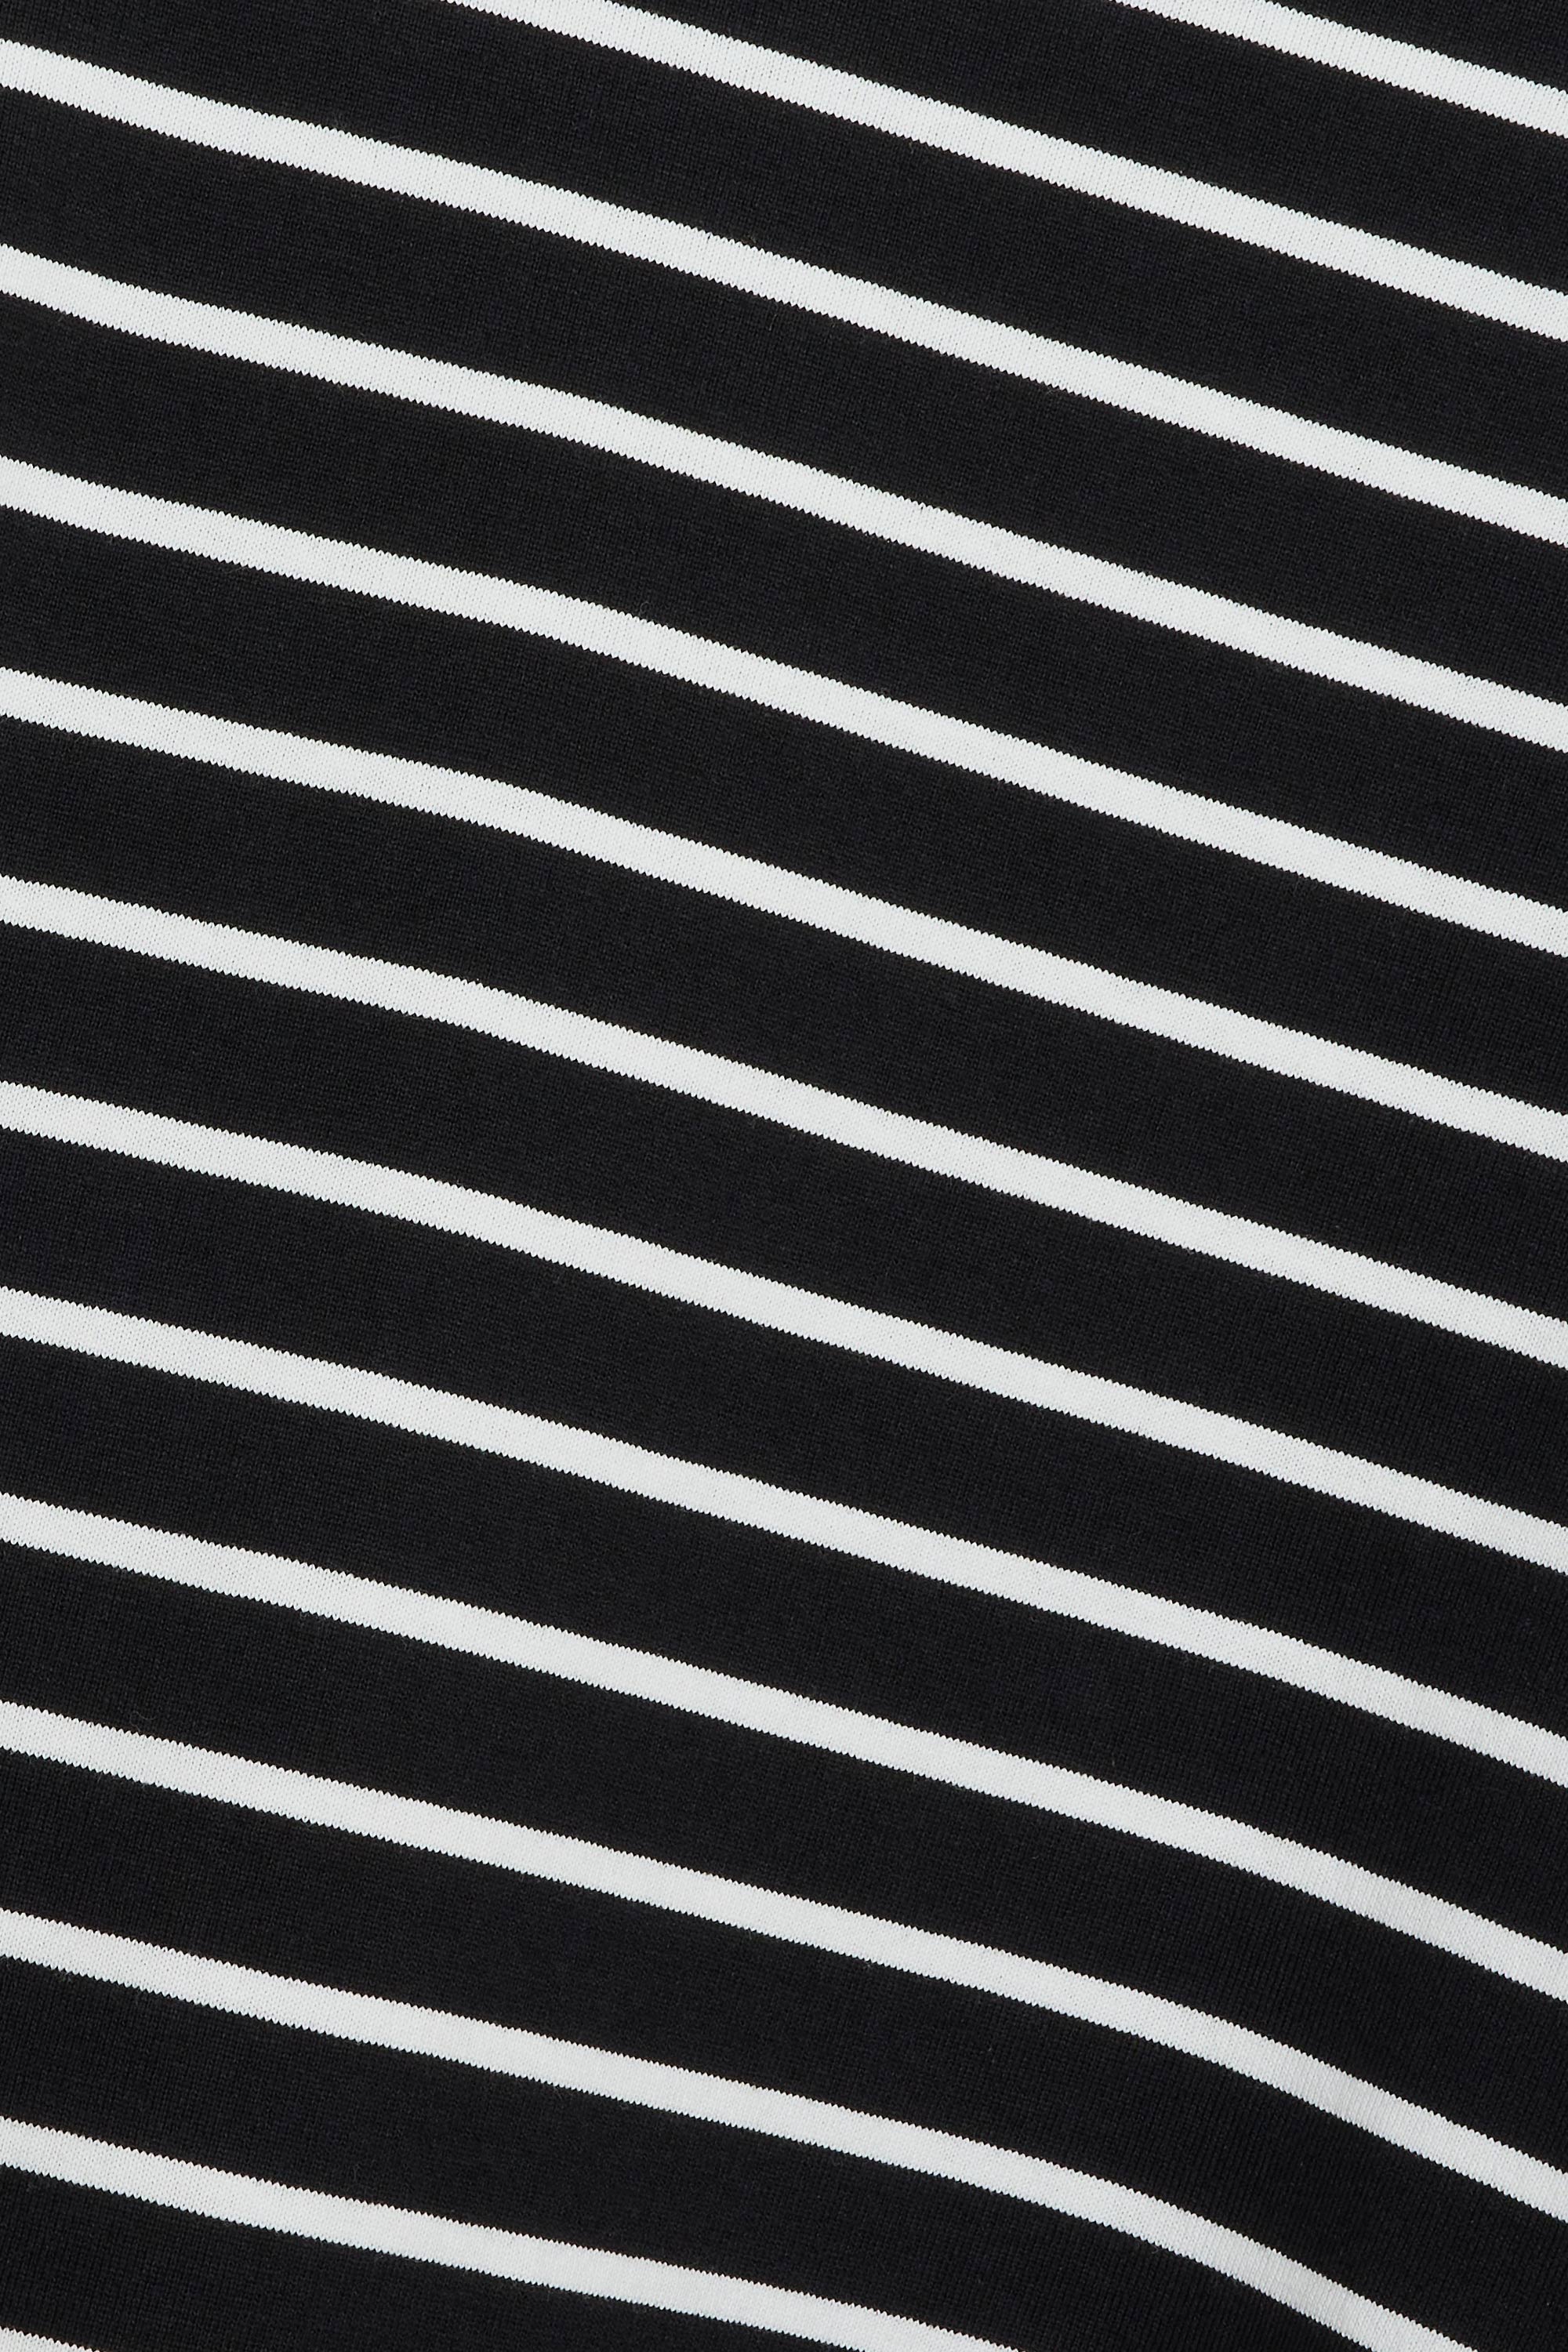 30/2 ORGANIC COTTON KNIT PANEL BORDER PANEL BORDER BASQUE SHIRT, Black × White